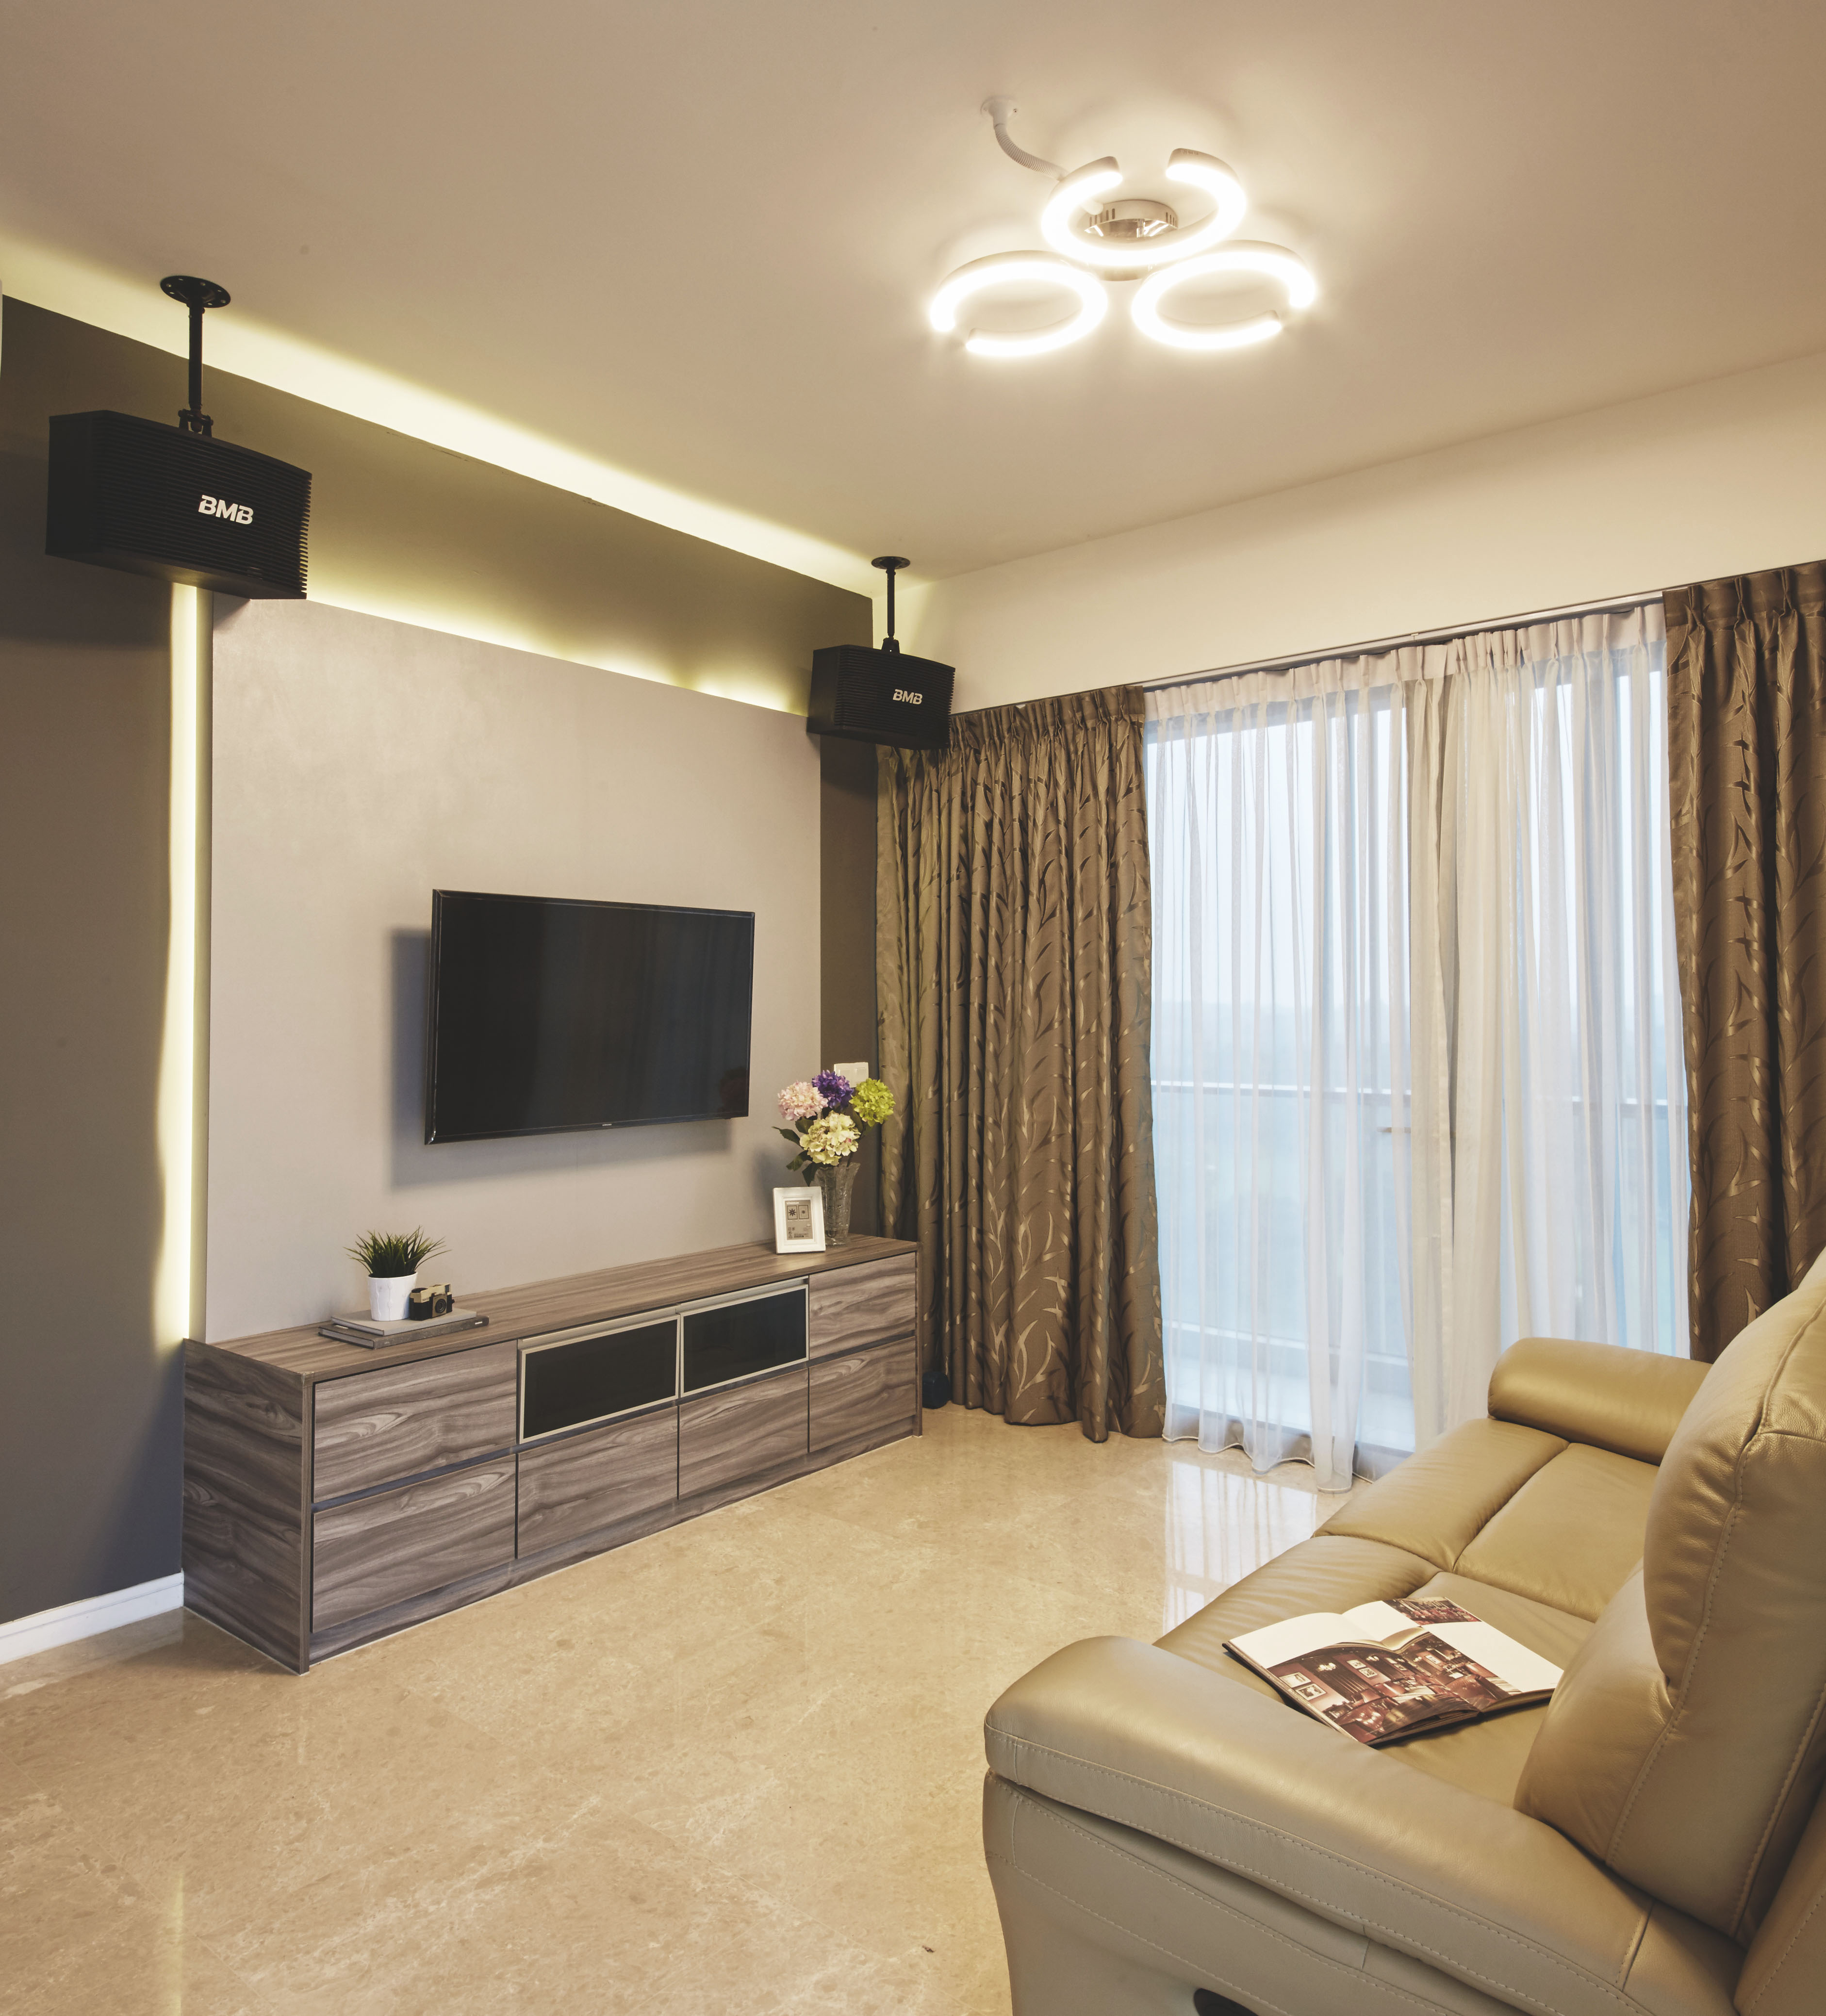 Eclectic, Industrial, Modern Design - Living Room - Condominium - Design by Carpenters 匠